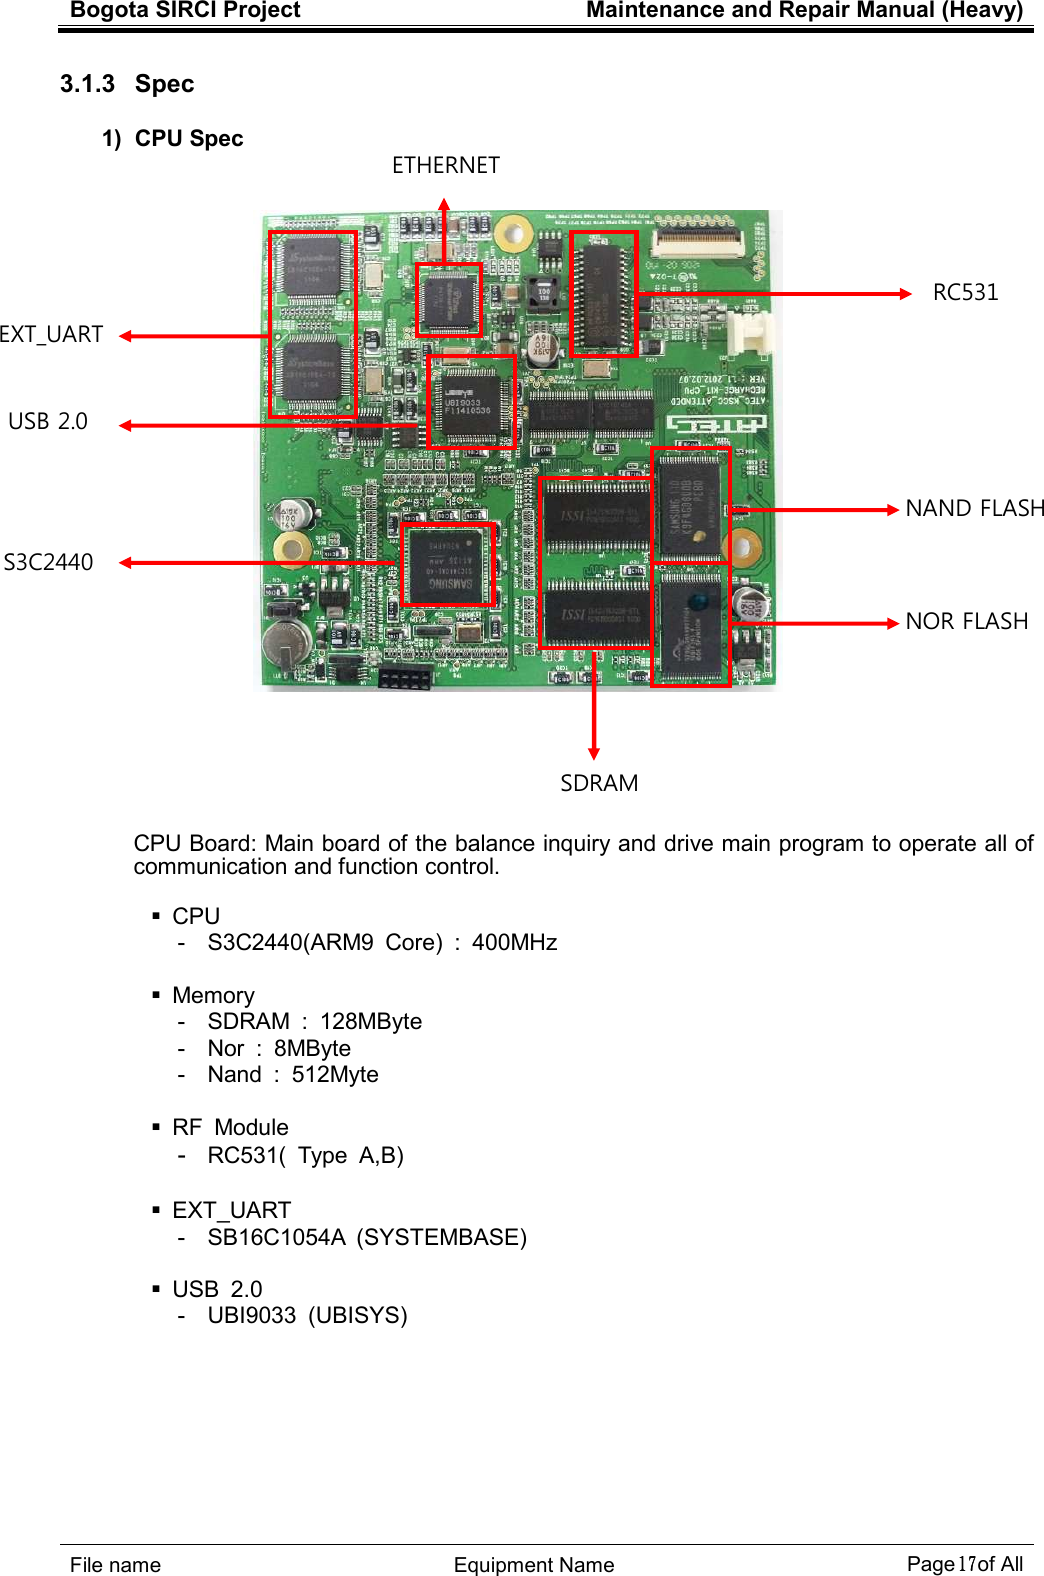 Bogota SIRCI Project  Maintenance and Repair Manual (Heavy)     １７１７１７１７ ! 3.1.3   Spec 1)  CPU Spec             ./A&quot;(   .? +),,9$!#&quot;@ &amp; A ,99&quot;%8 &quot;? 2#!&quot; A &apos;)5&quot;/?  A 5&quot;/?  A 1&apos;)&quot; # &quot;? #1+&apos;$ 0 !&lt;/&amp; =0B.!#0? /&apos;3&apos;91,! $C0&quot;/!&amp; ./ )(9? ./@9++ $./C&amp;                     EXT_UART            USB 2.0            S3C2440            RC531            NAND FLASH             NOR FLASH            SDRAM            ETHERNET 